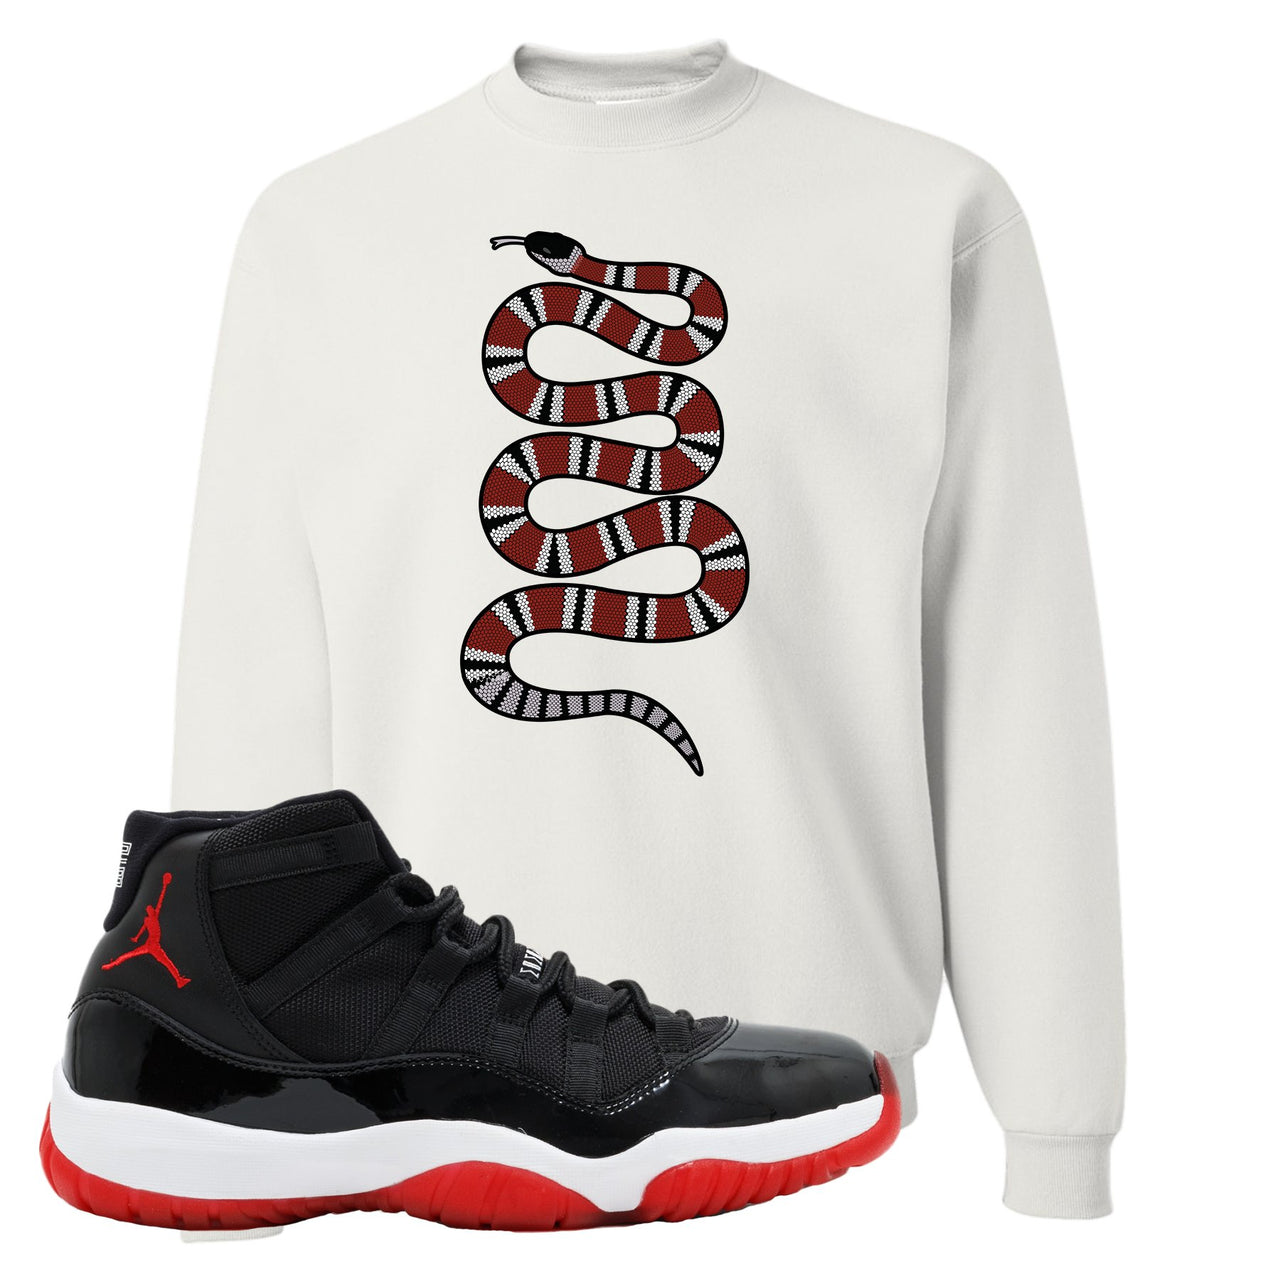 Jordan 11 Bred Coiled Snake White Sneaker Hook Up Crewneck Sweatshirt